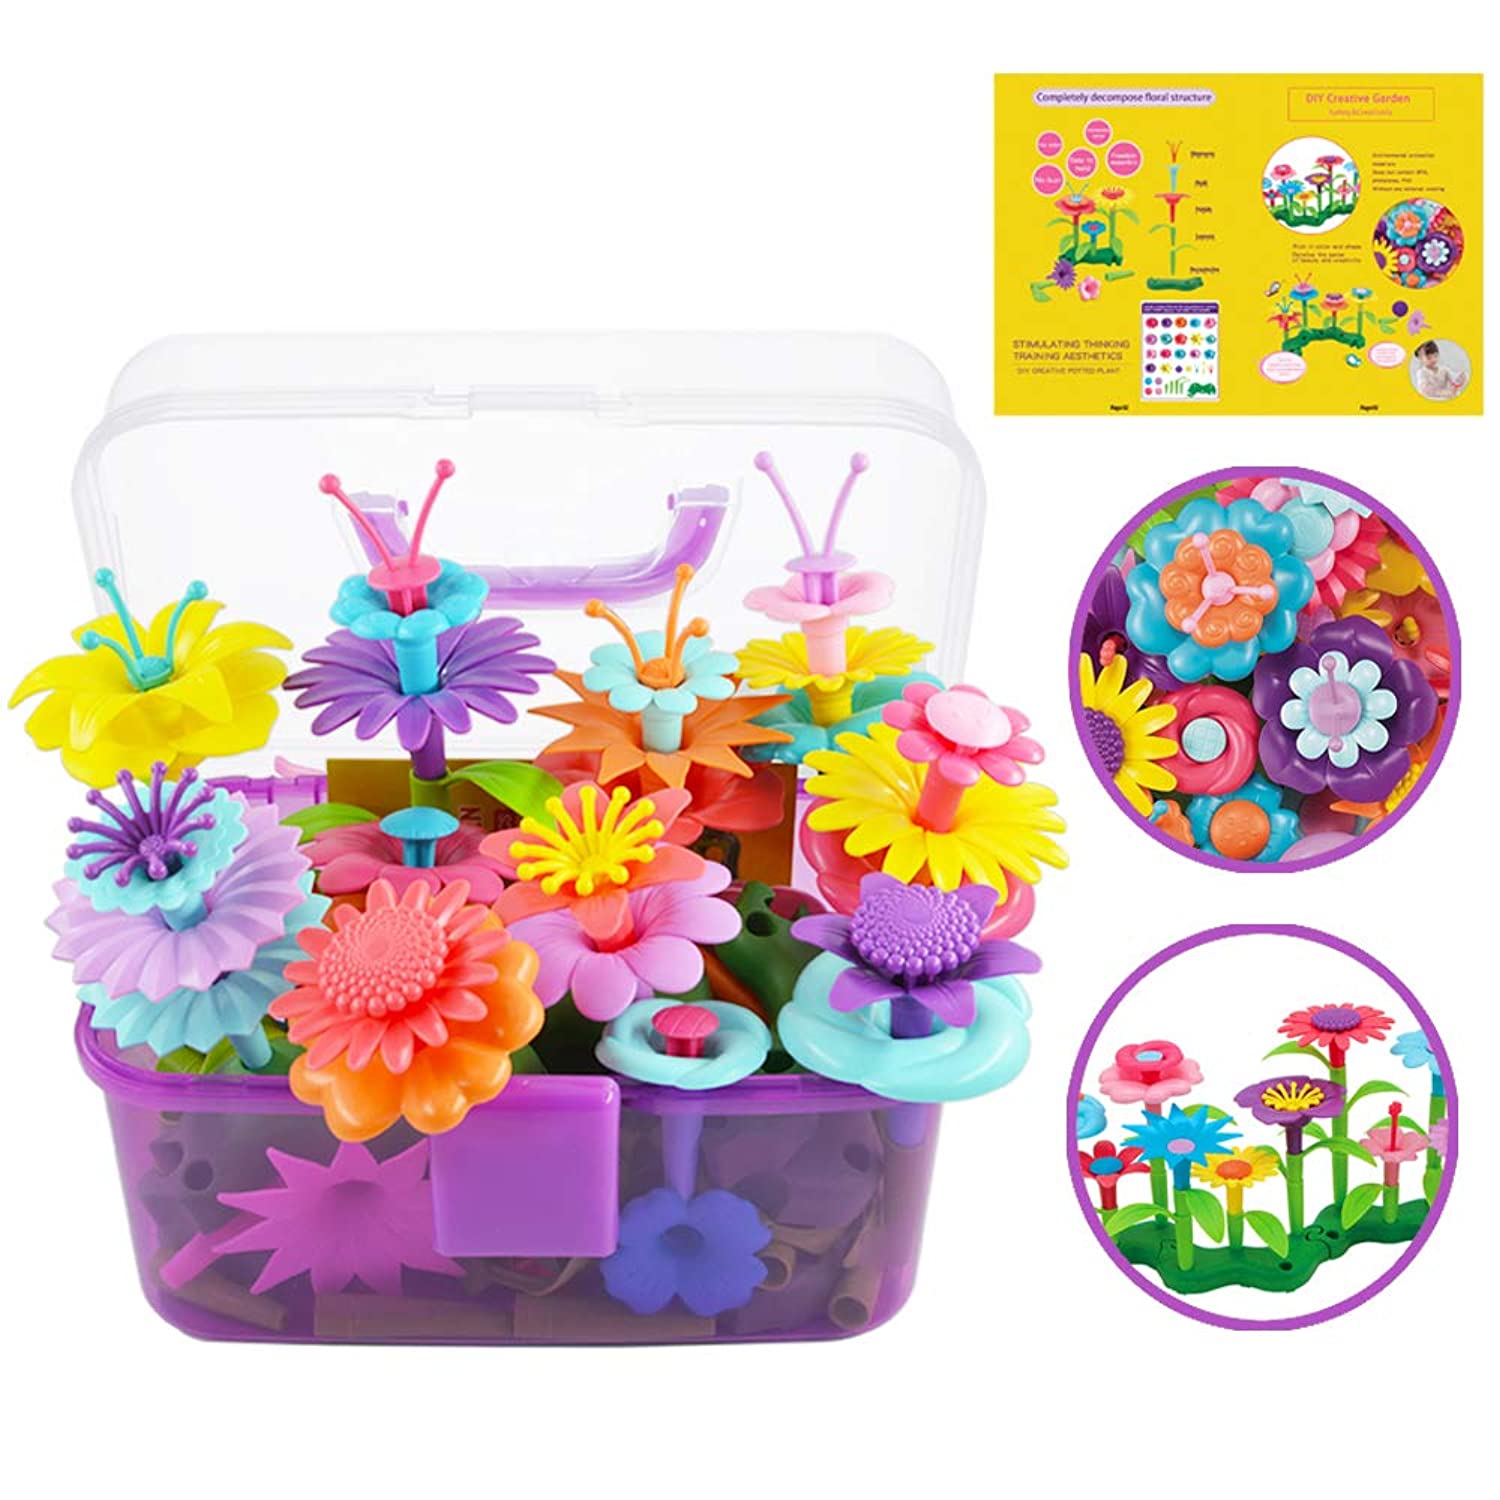  Garbo Star Girl Toys for 3 4 5 6 Year Old Girls Birthday Gift,  81PCS Flower Garden Building Toys Set for Girls Toddlers Kids Ages 1-3  3-5,Building Educational Stem Toys : Toys & Games